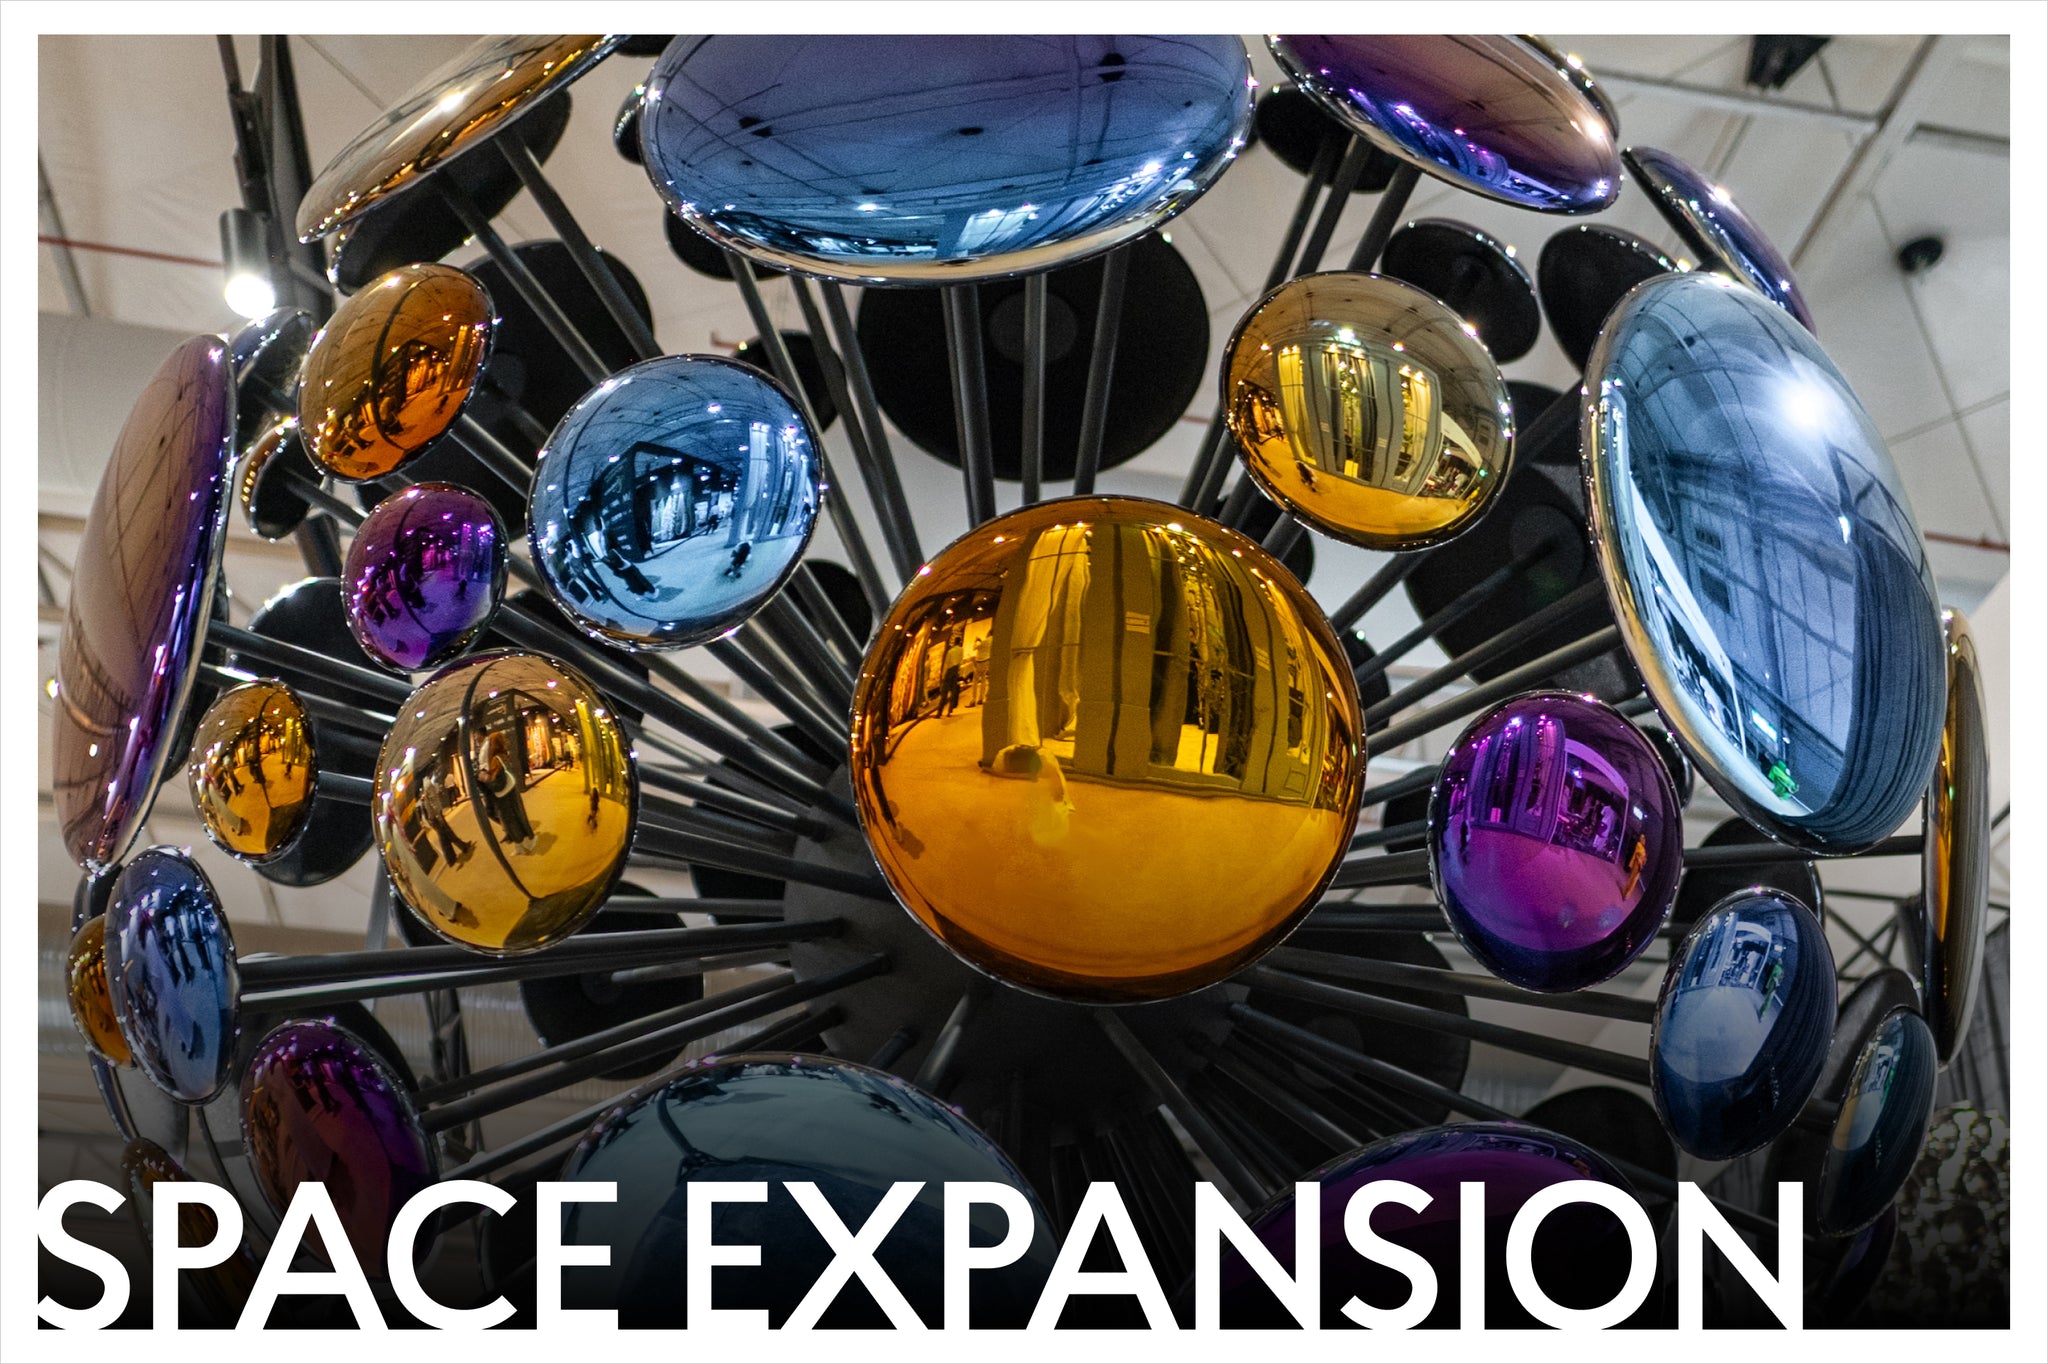 Space Expansion Sculpture Colorful